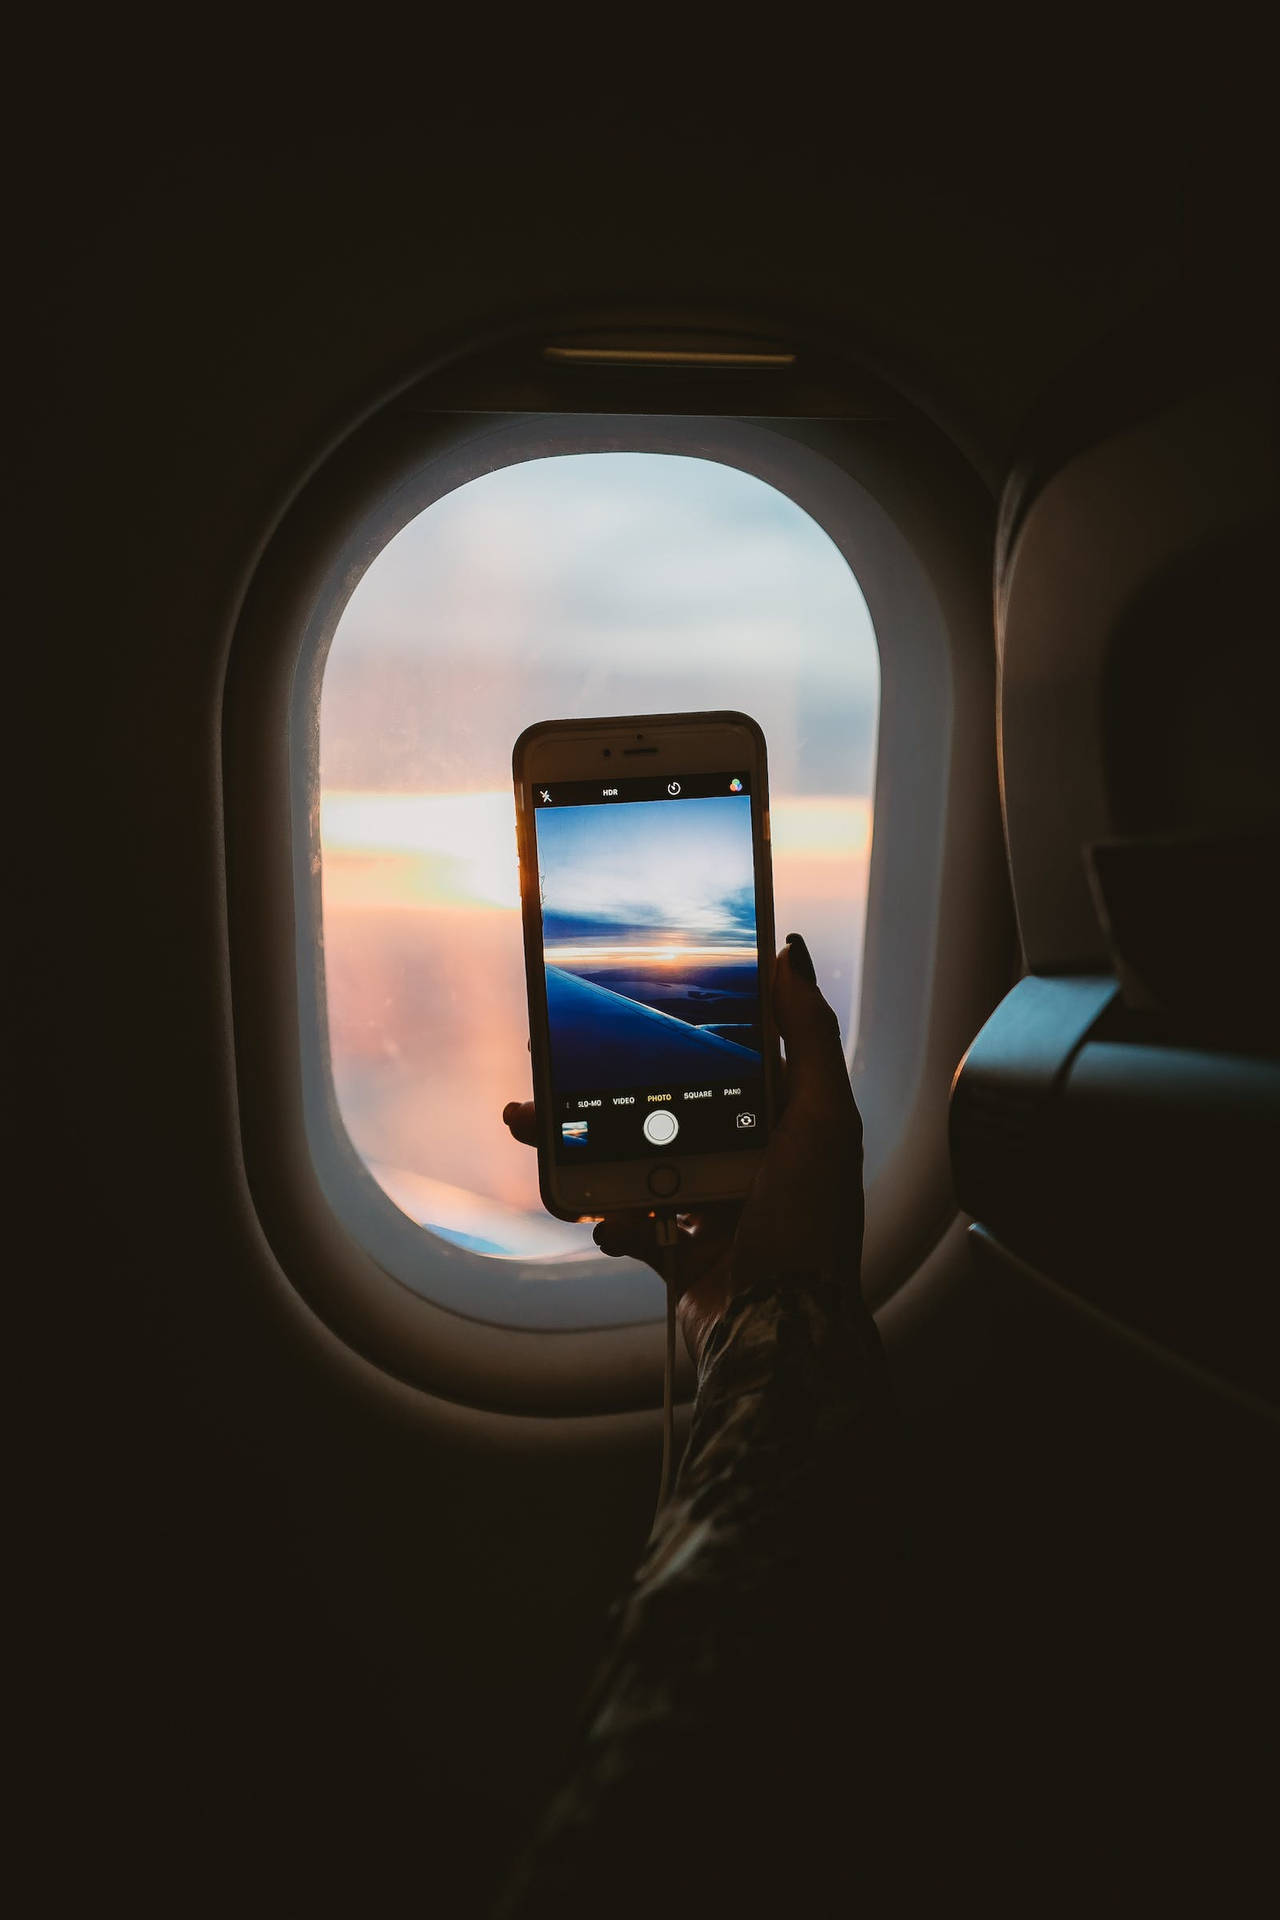 Dark Iphone On The Plane Wallpaper